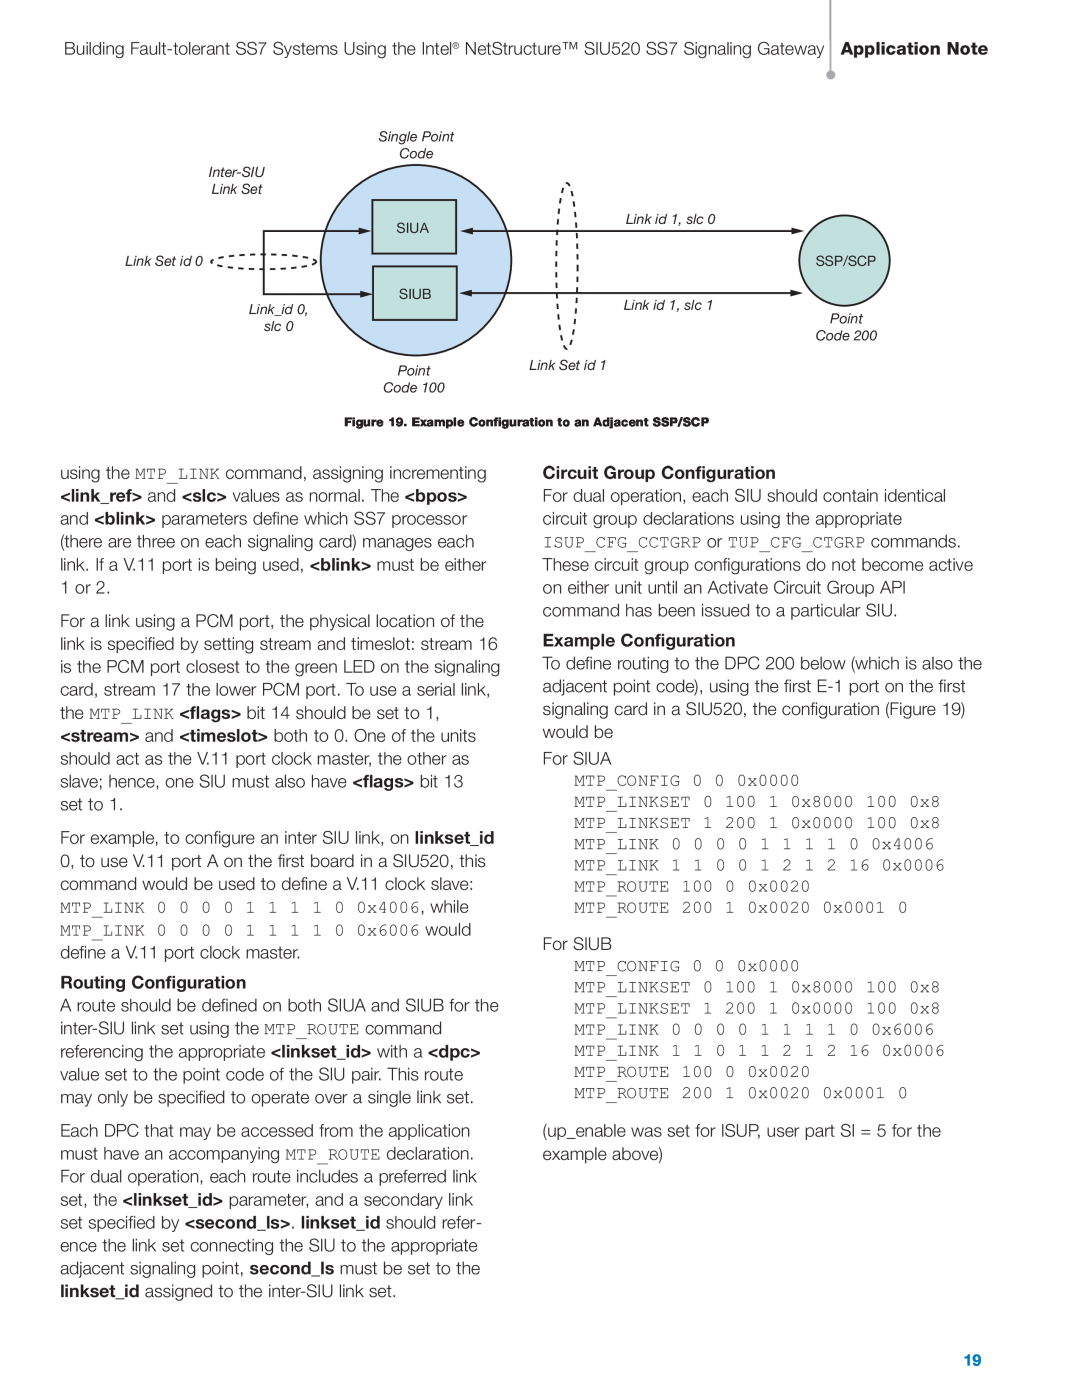 Intel SIU520 SS7 manual Routing Configuration, Circuit Group Configuration, Example Configuration 